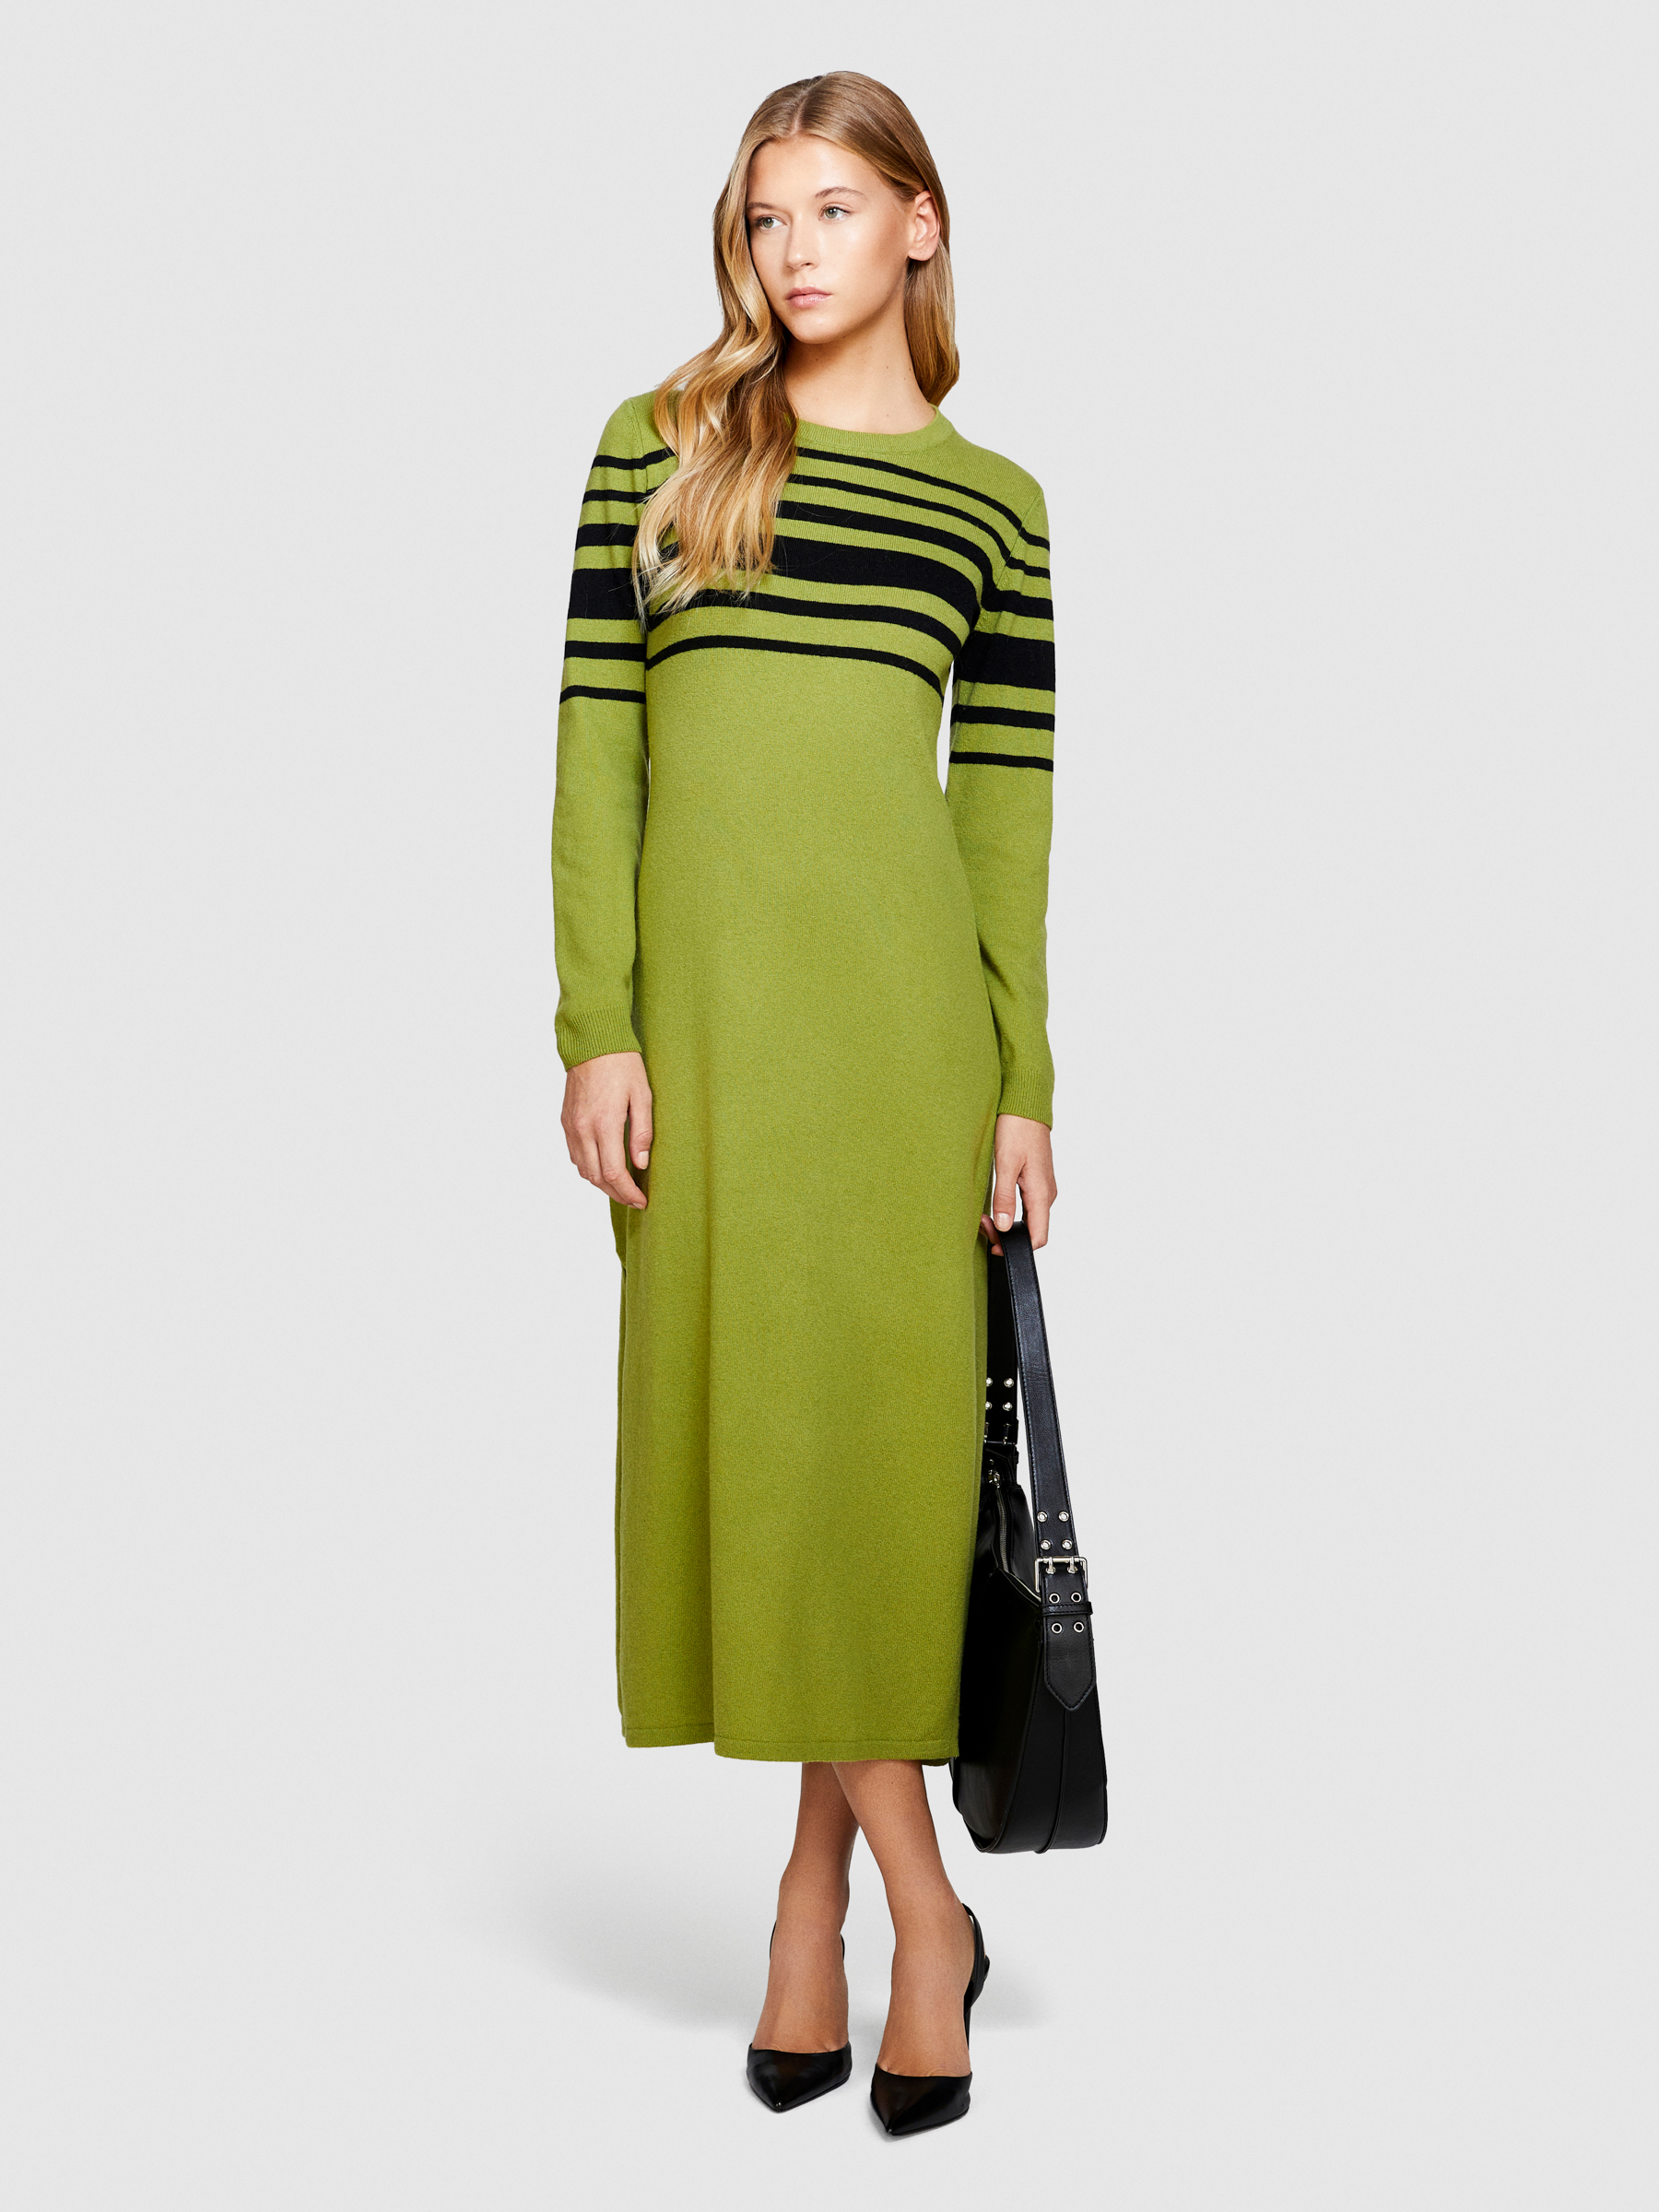 Sisley - Knit Dress With Stripes, Woman, Olive Green, Size: XS